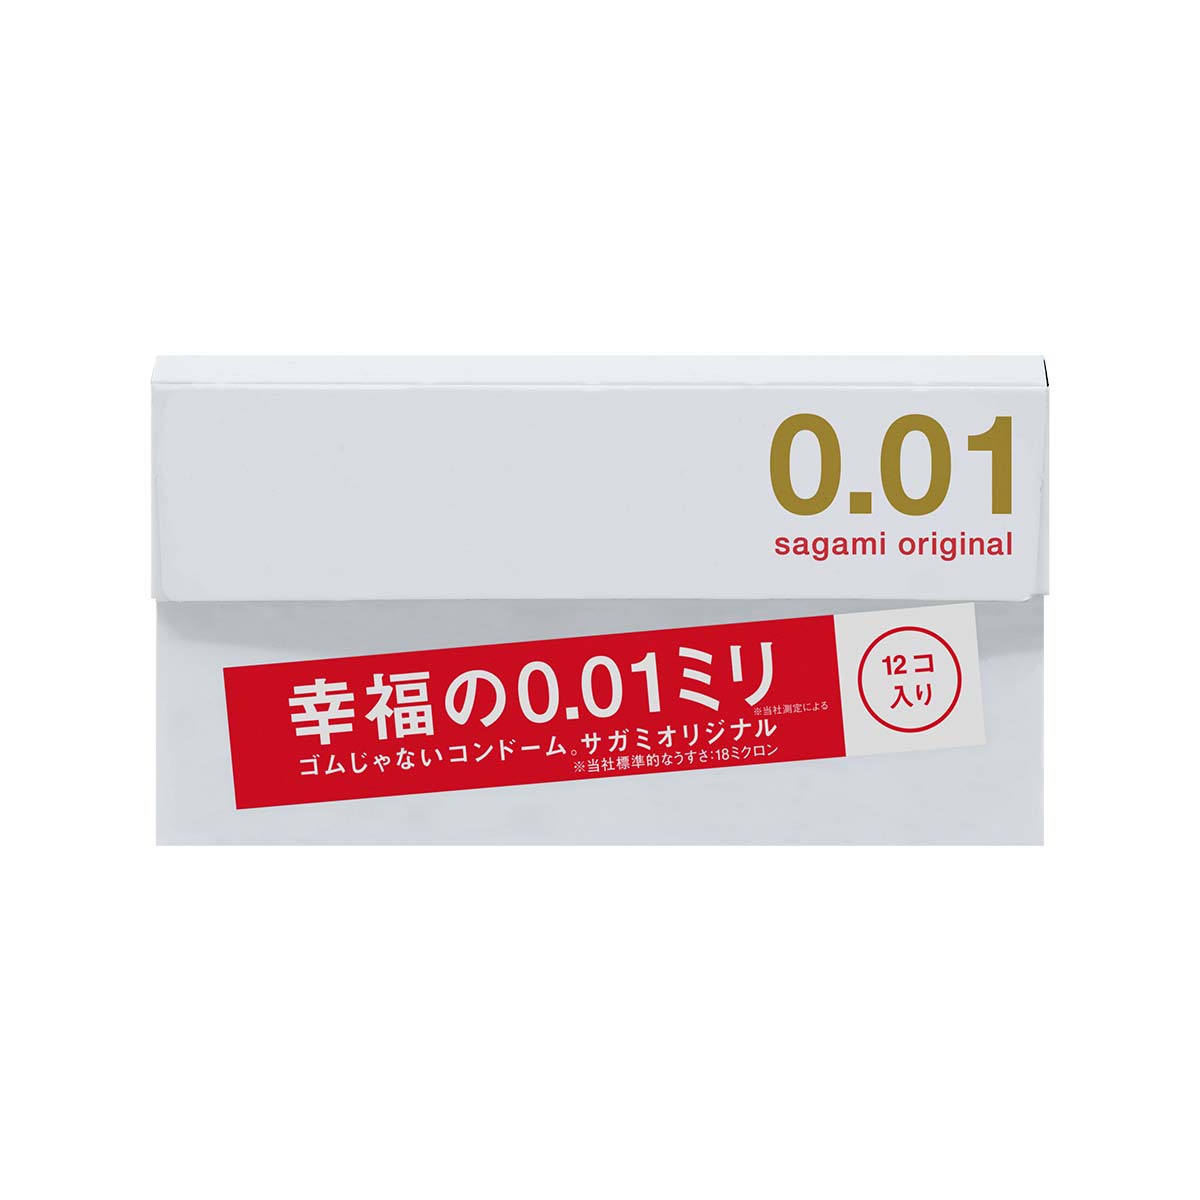 Sagami Original 0.01 12's Pack PU Condom (Defective Packaging)-p_2